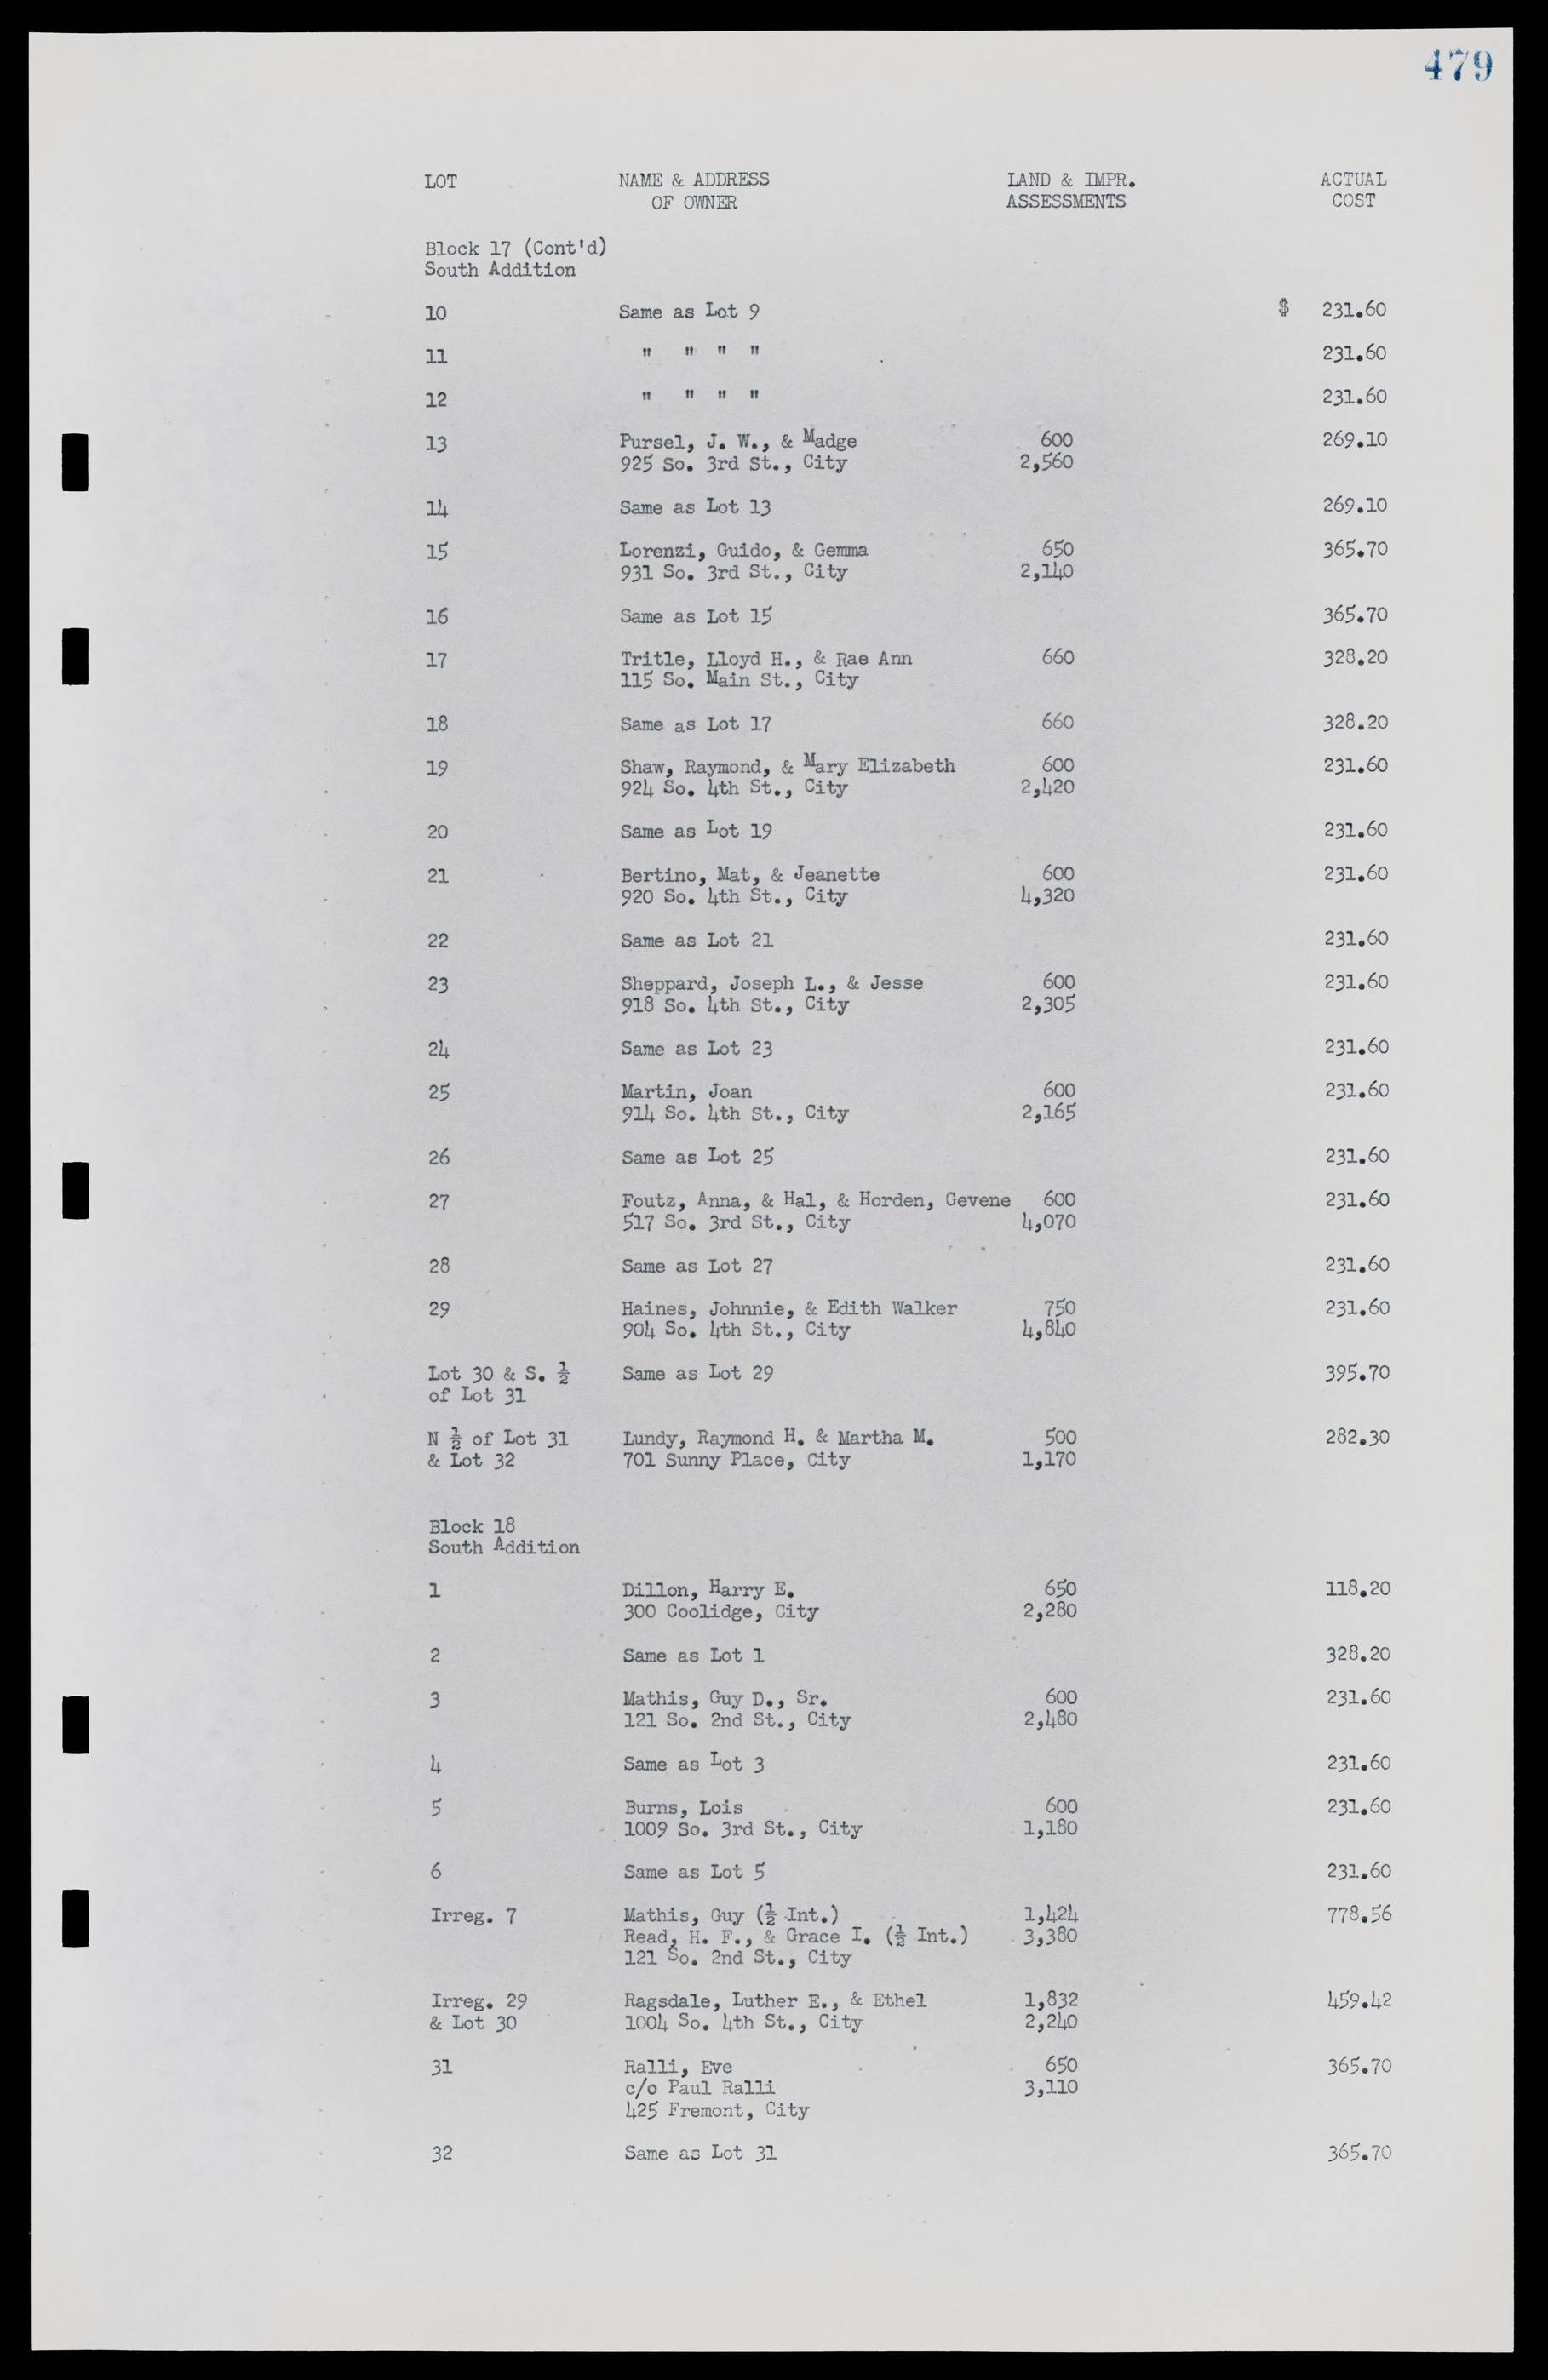 Las Vegas City Commission Minutes, November 7, 1949 to May 21, 1952, lvc000007-495